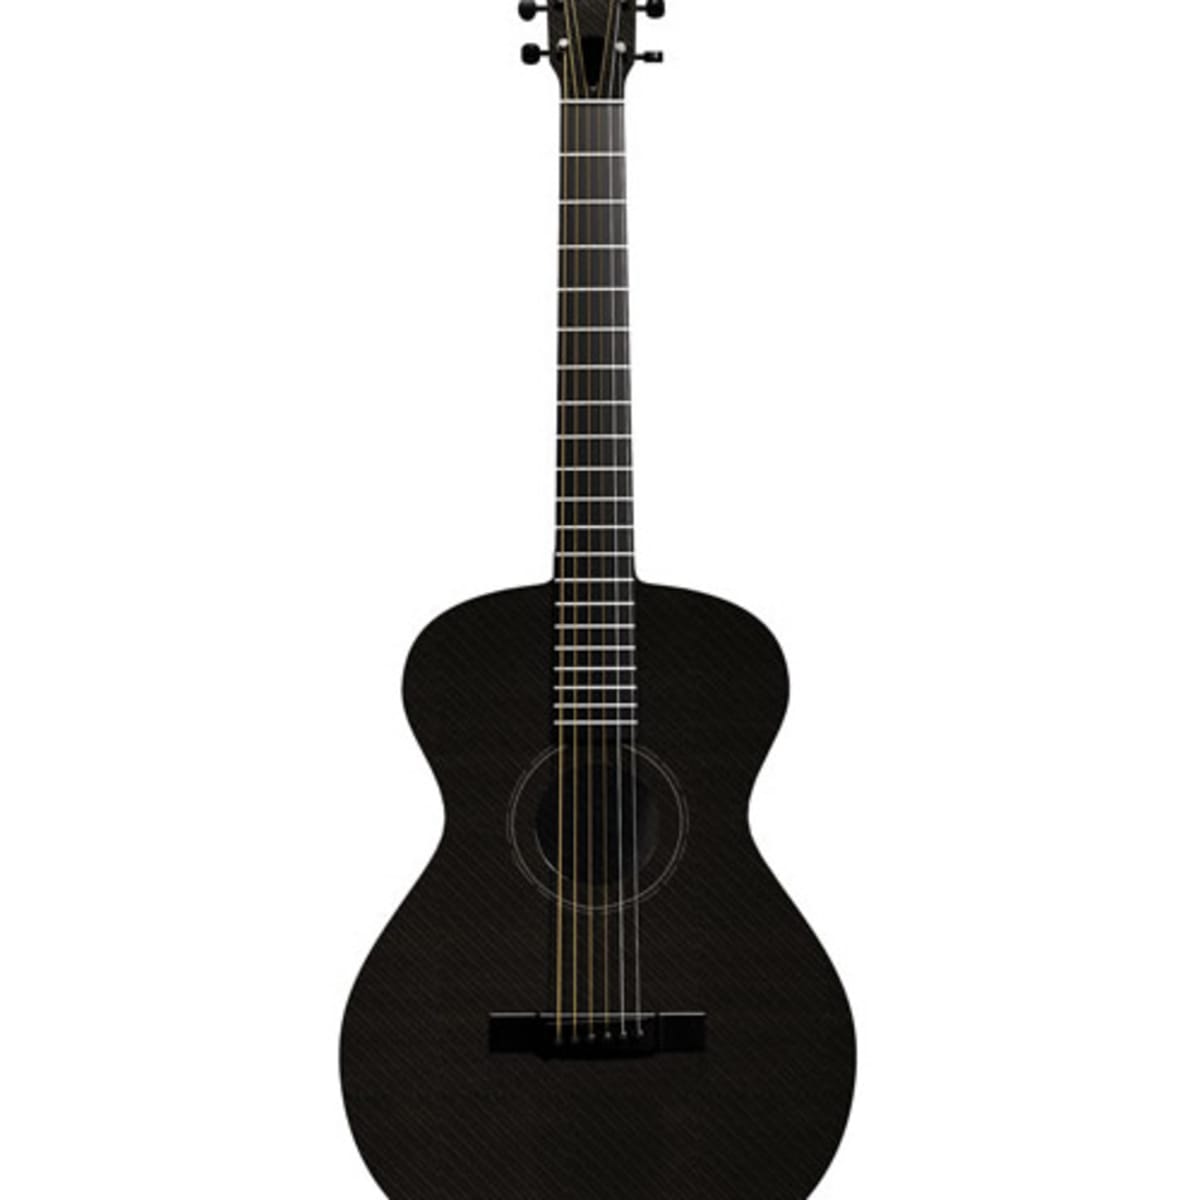 Blackbird Lucky 13 Guitar - Acquire